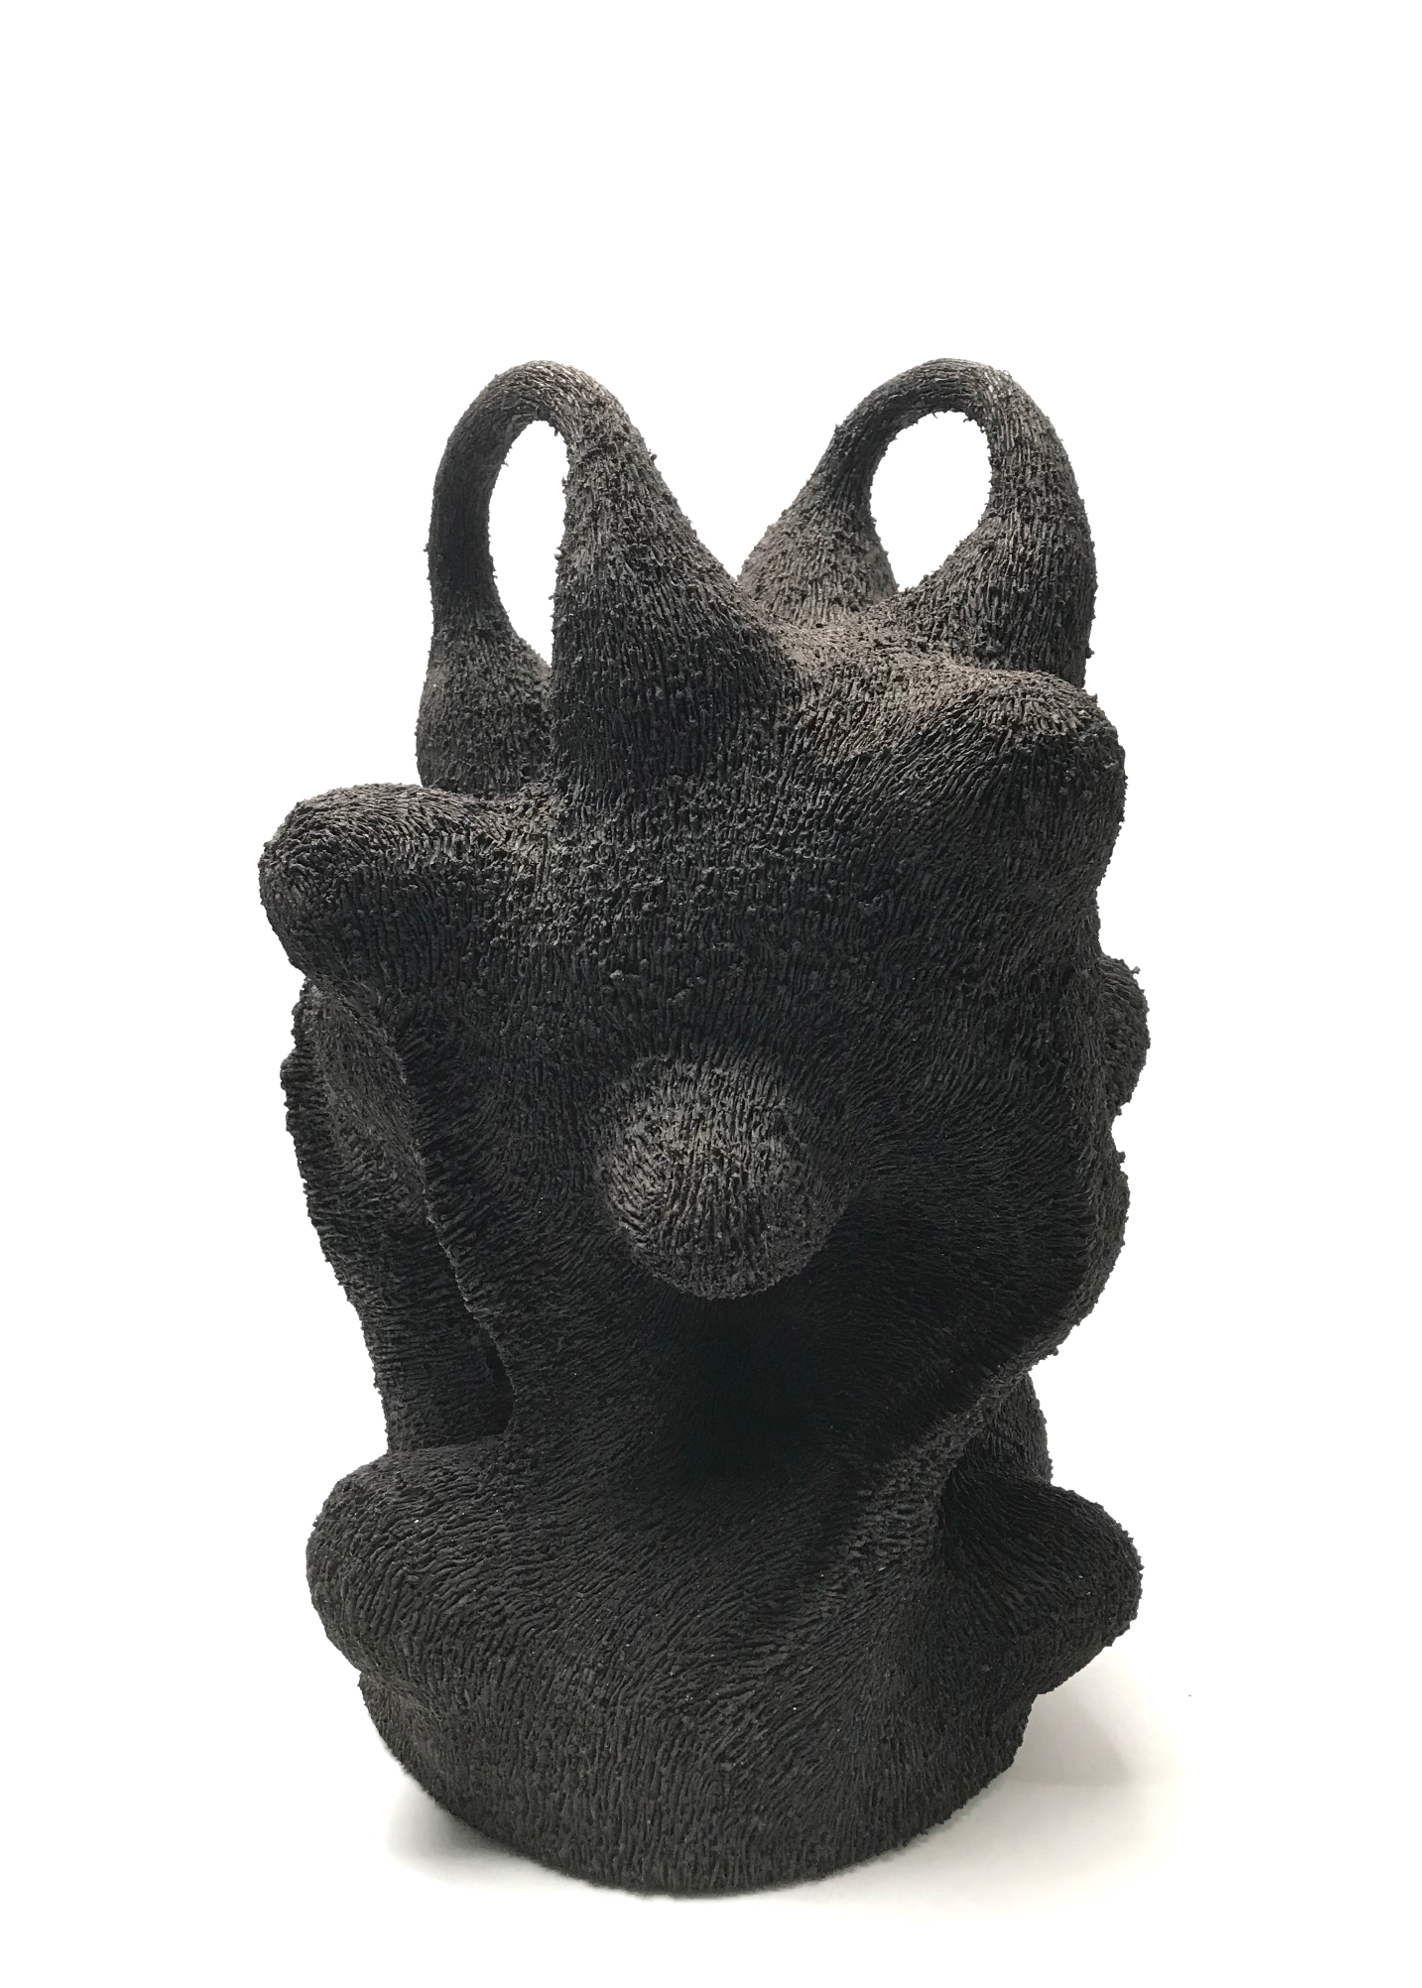 Handle. Ceramic, black clay body, 15.5x10x10, 2019. Photo credit: Donté K. Hayes